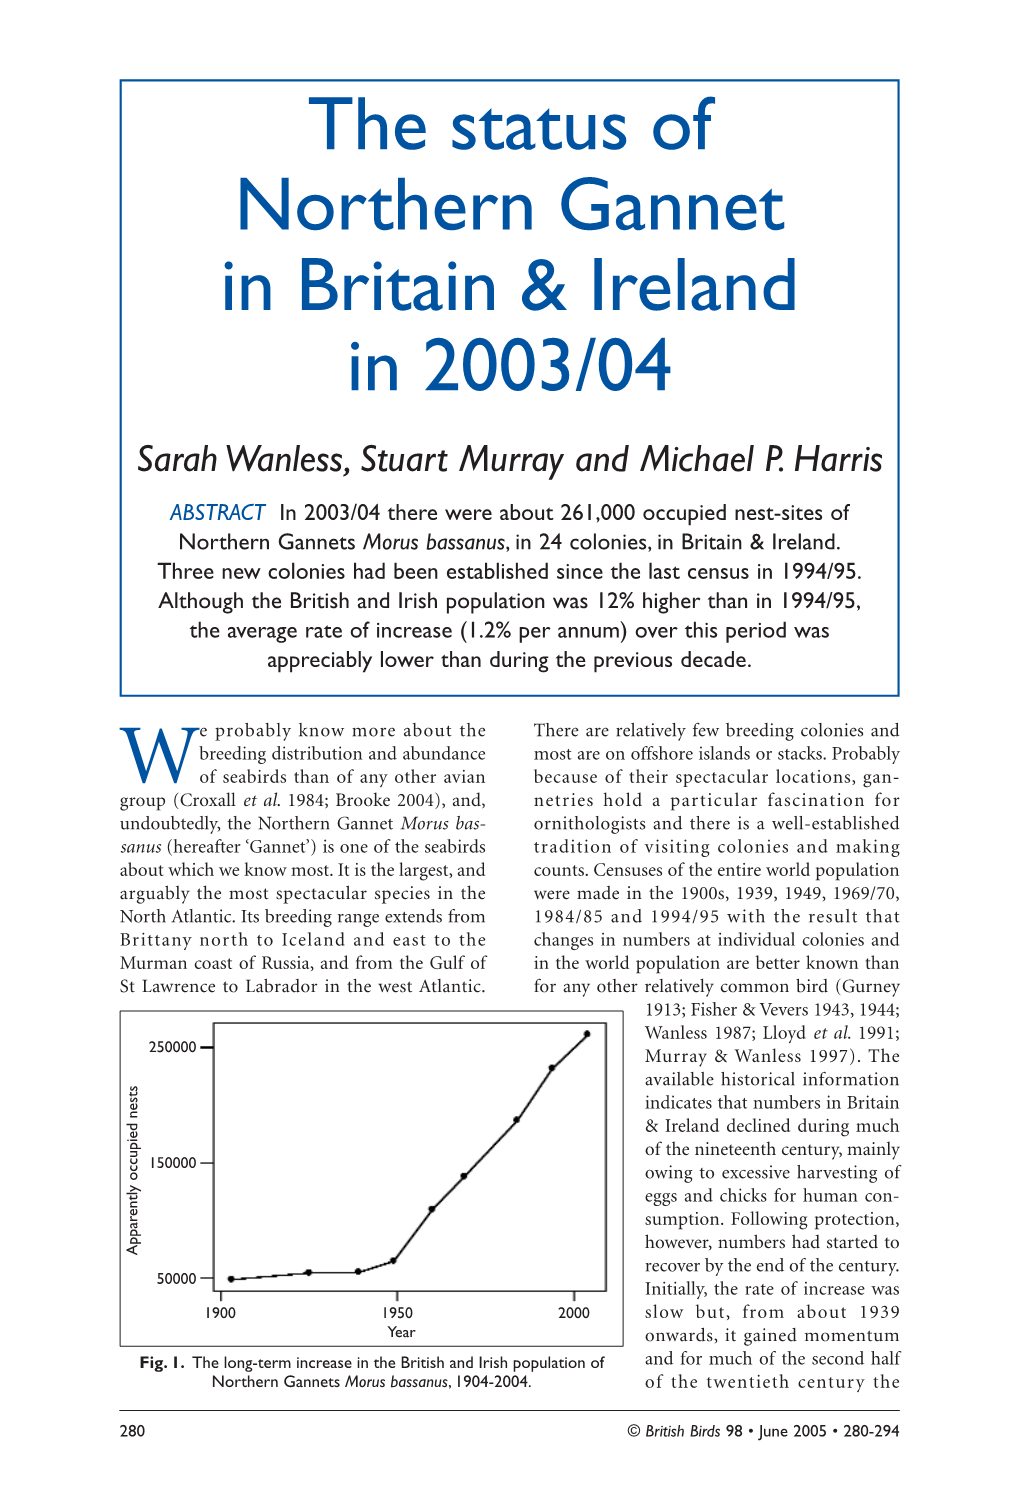 The Status of Northern Gannet in Britain & Ireland in 2003/04